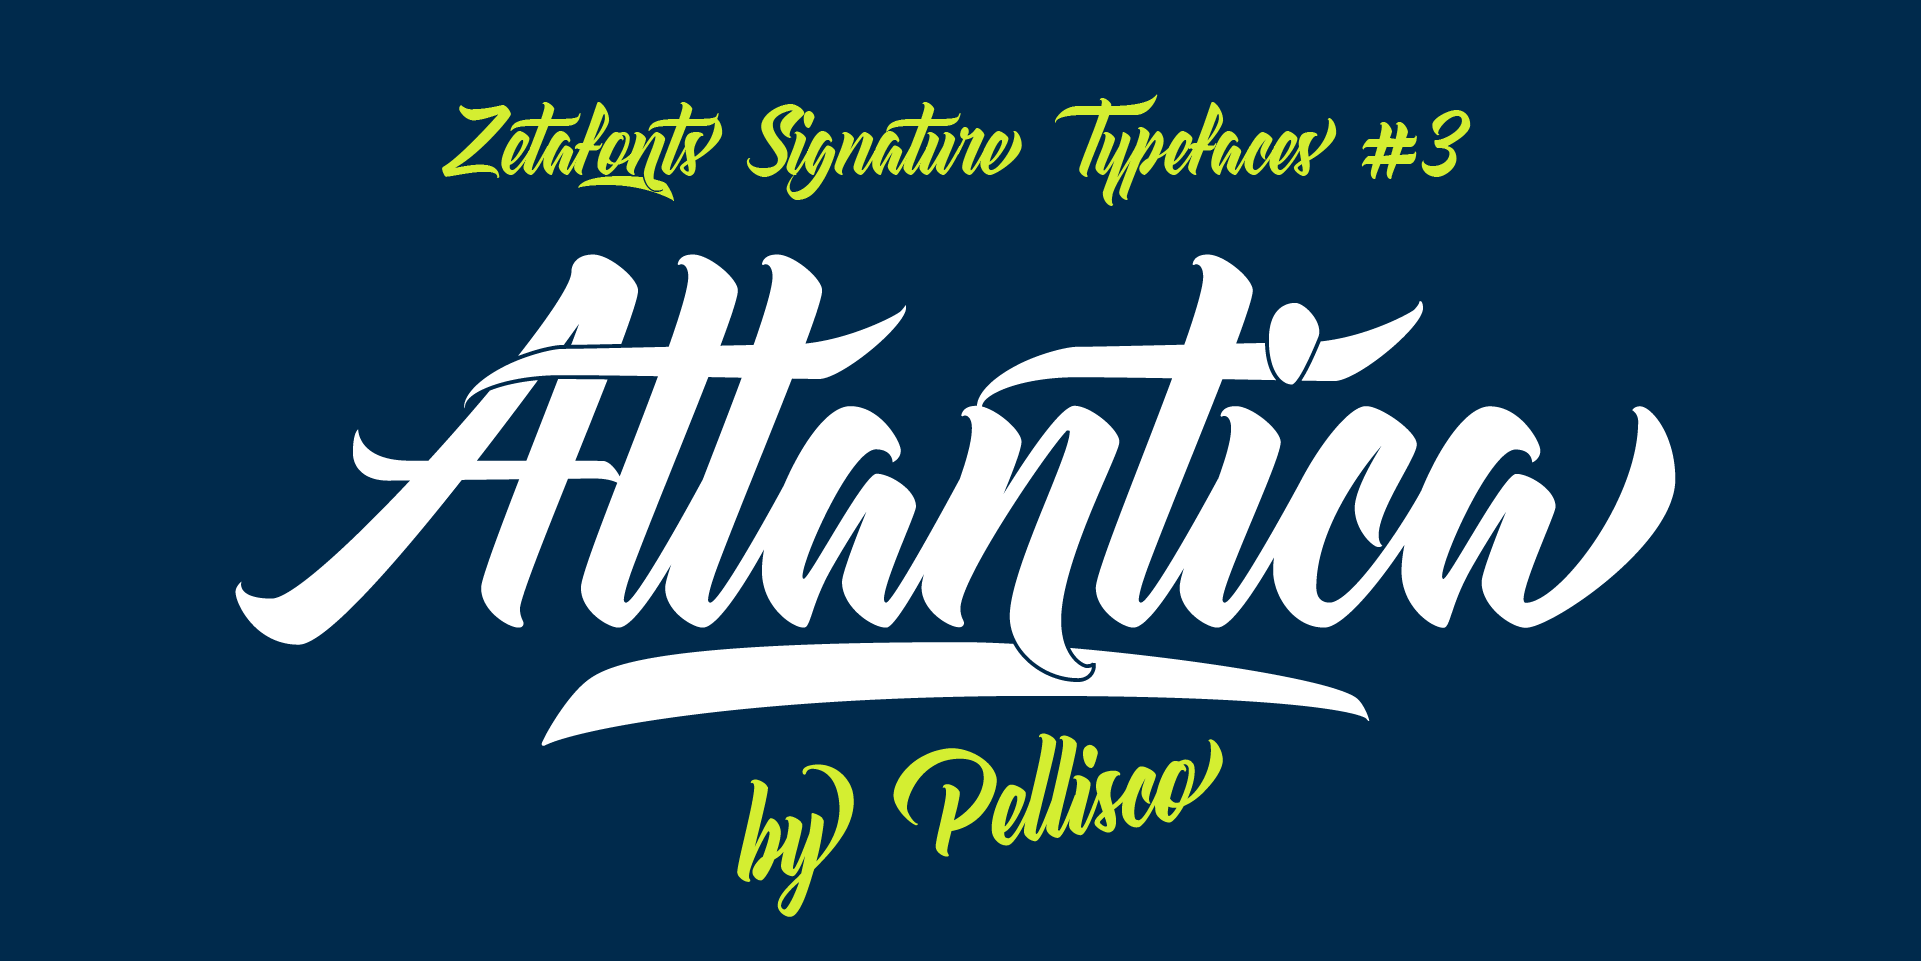 Atlantica